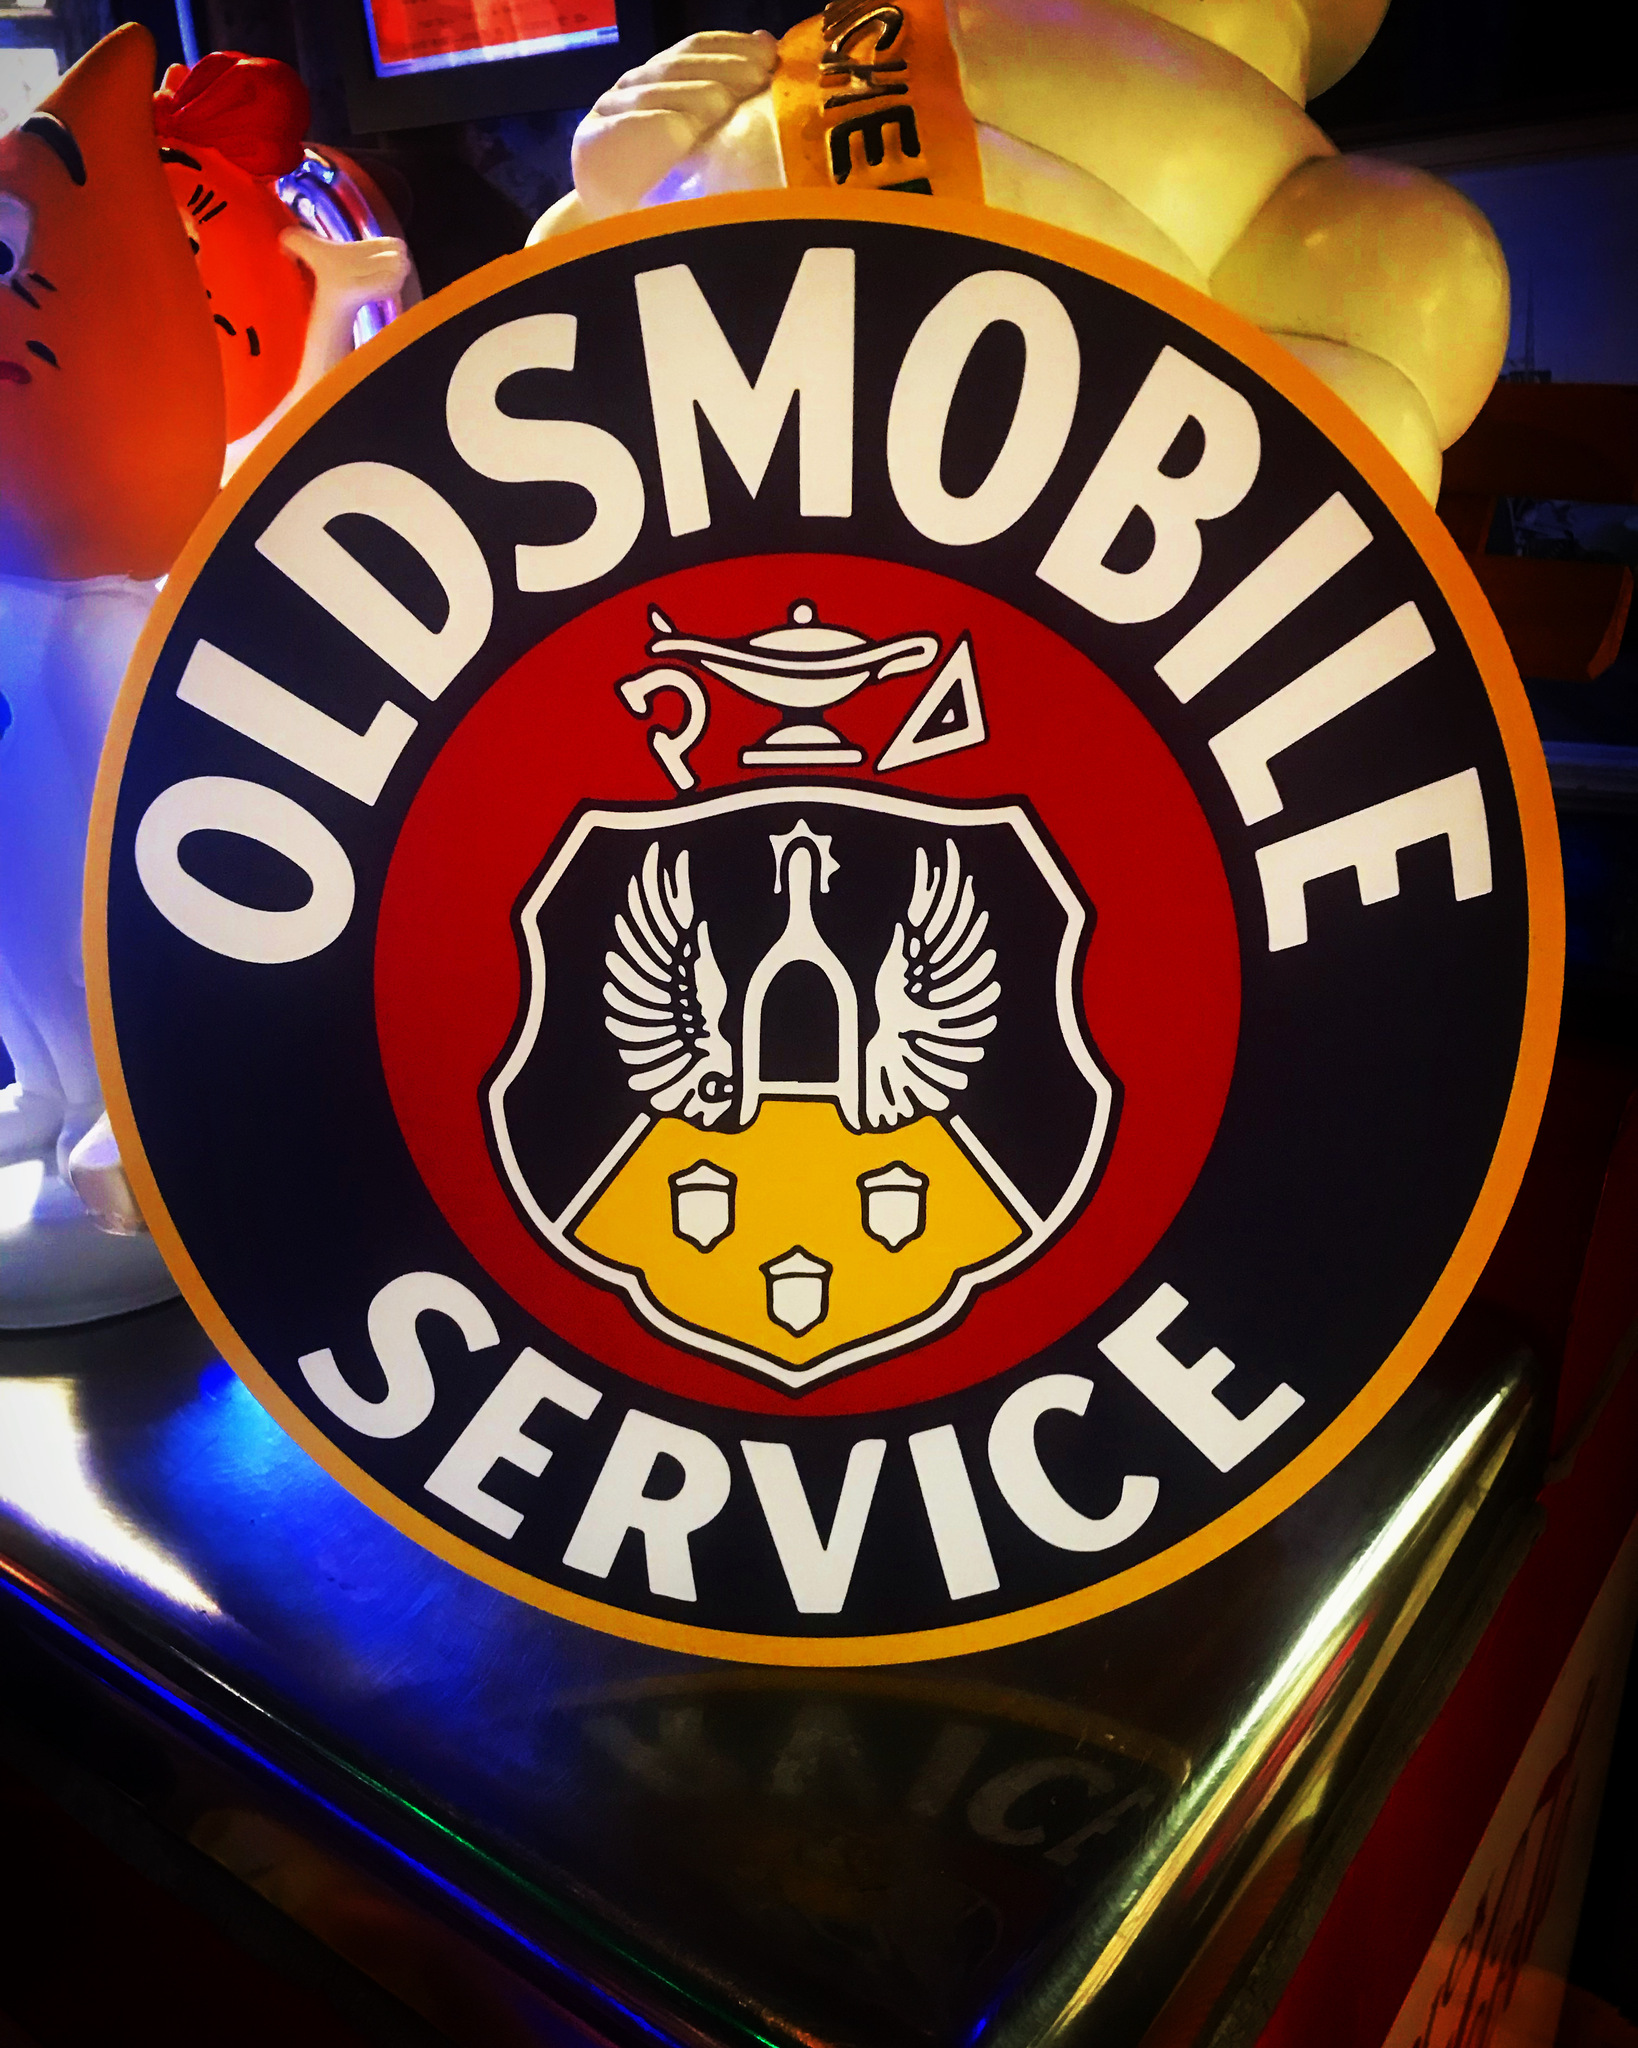 Oldsmobile Service Skylt